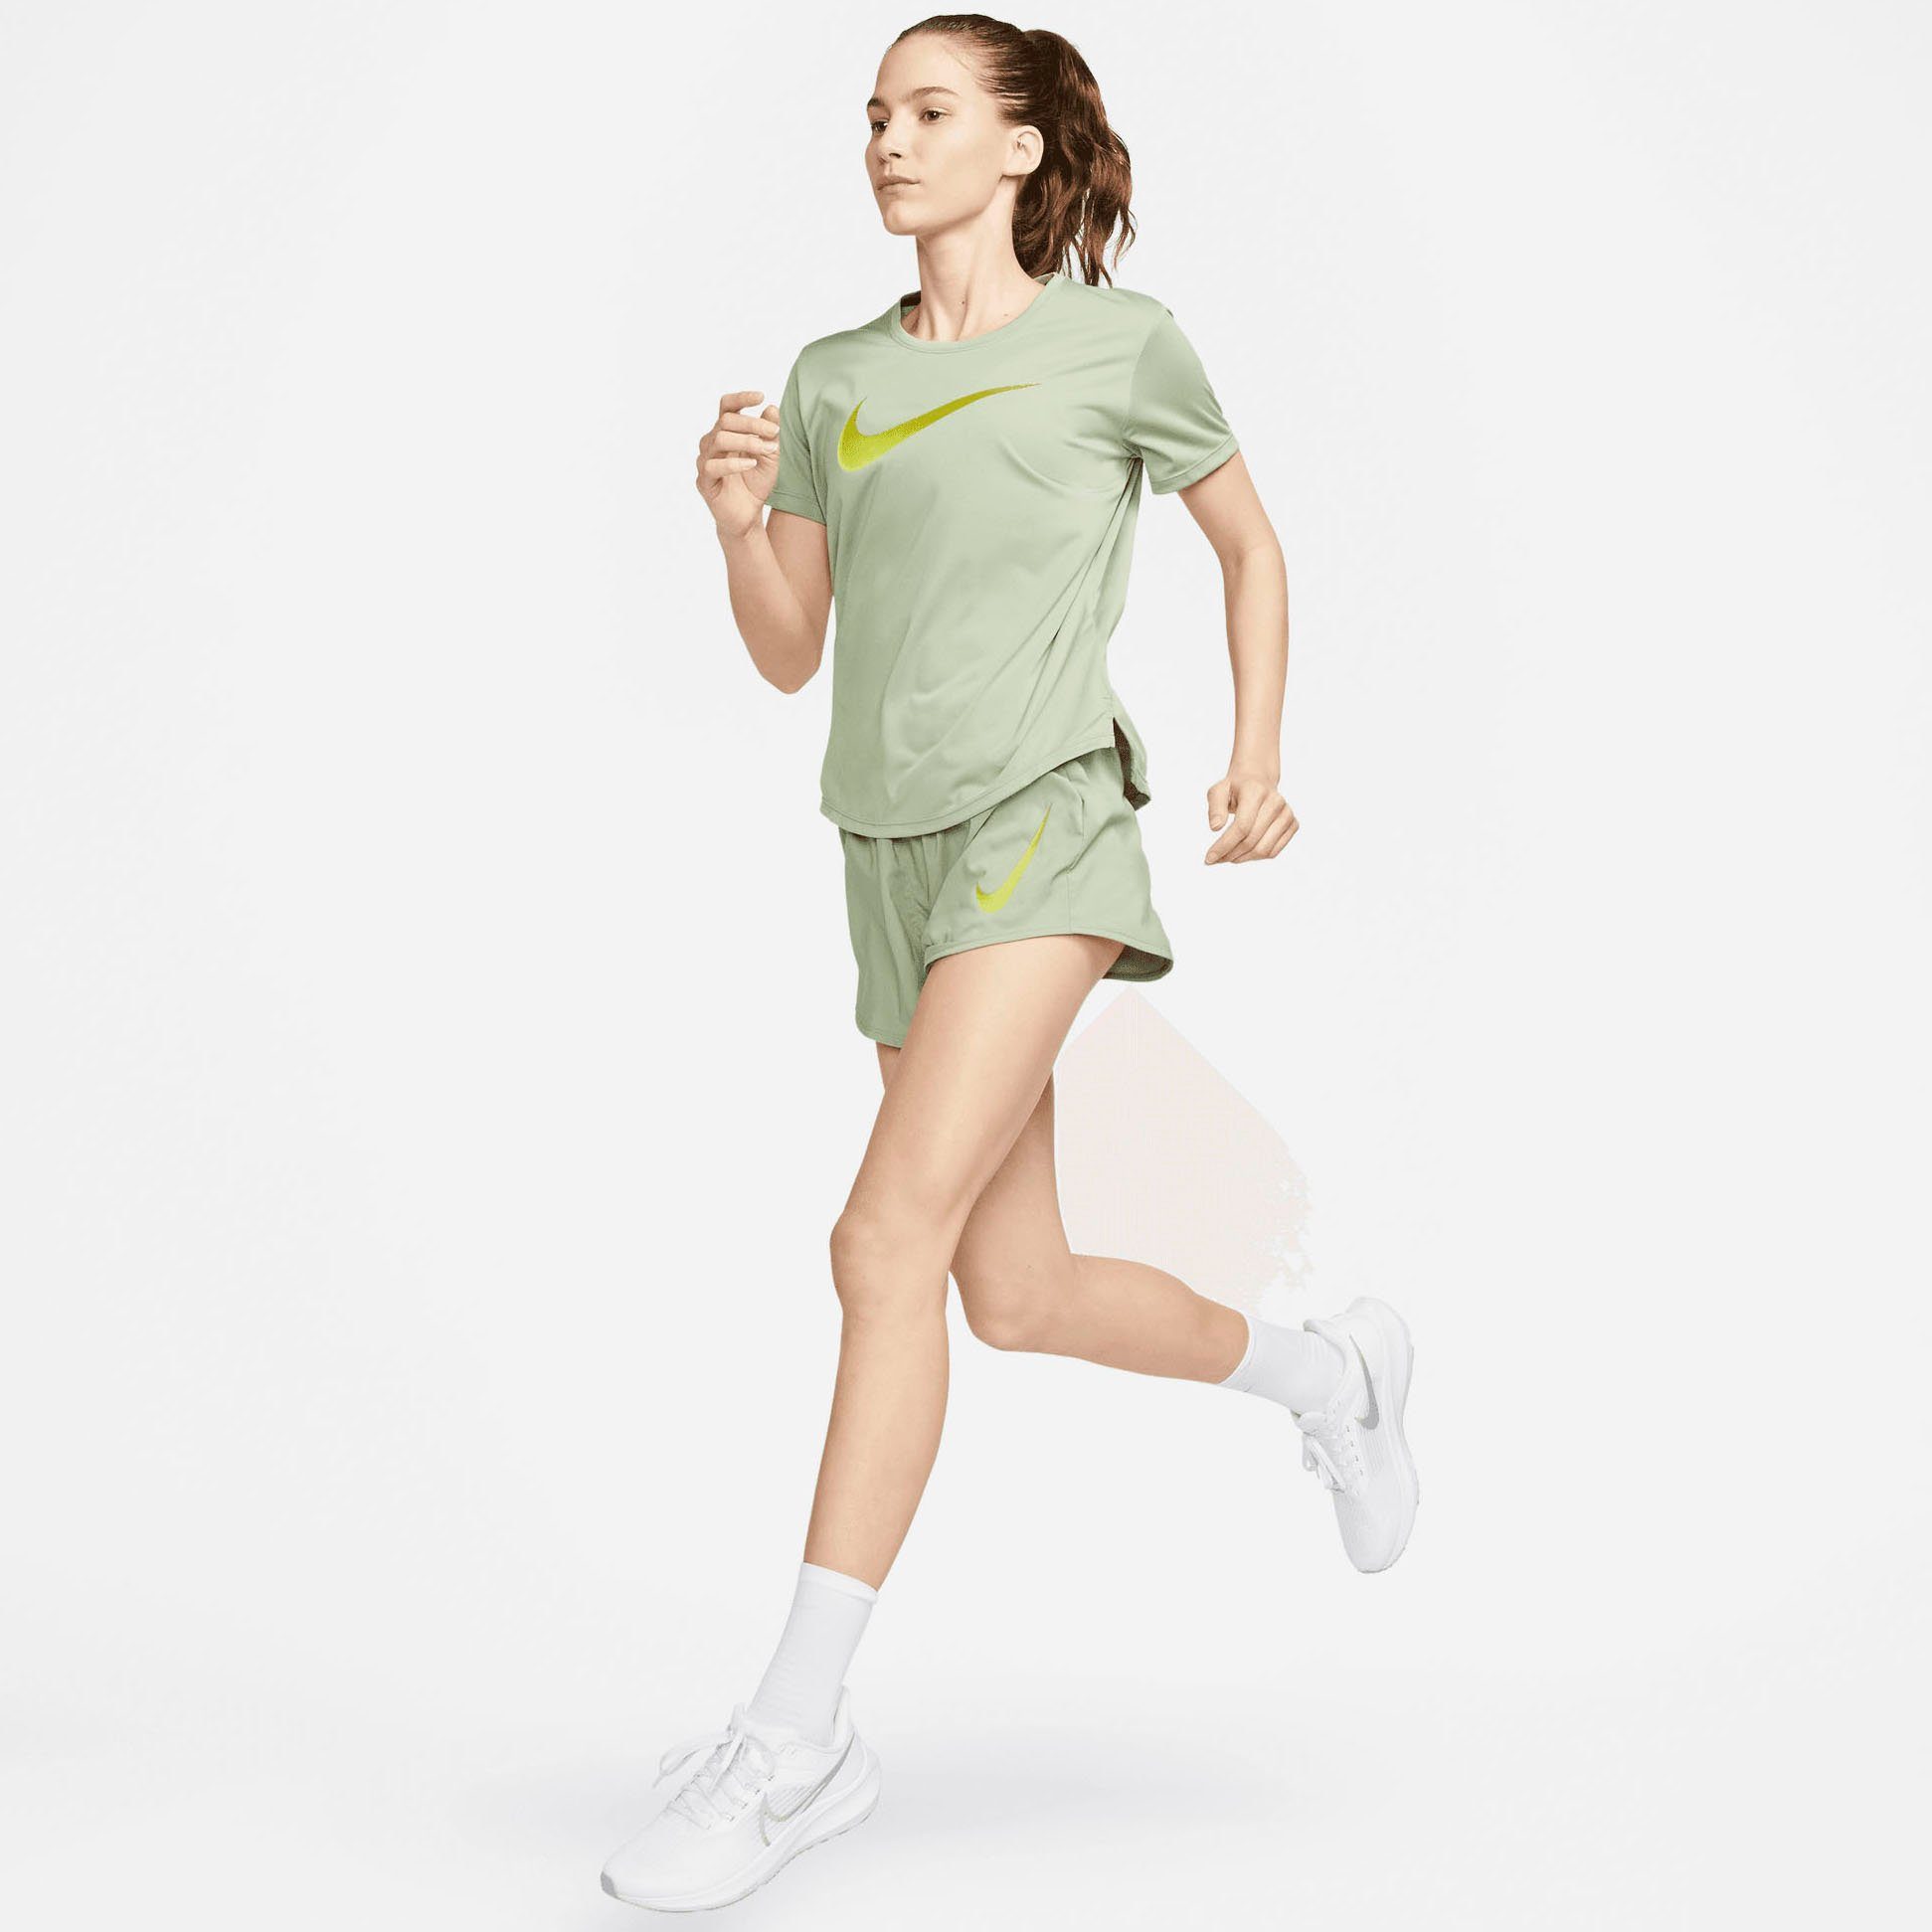 Laufshirt grün Swoosh Nike Dri-FIT Top Women's Short-Sleeved One